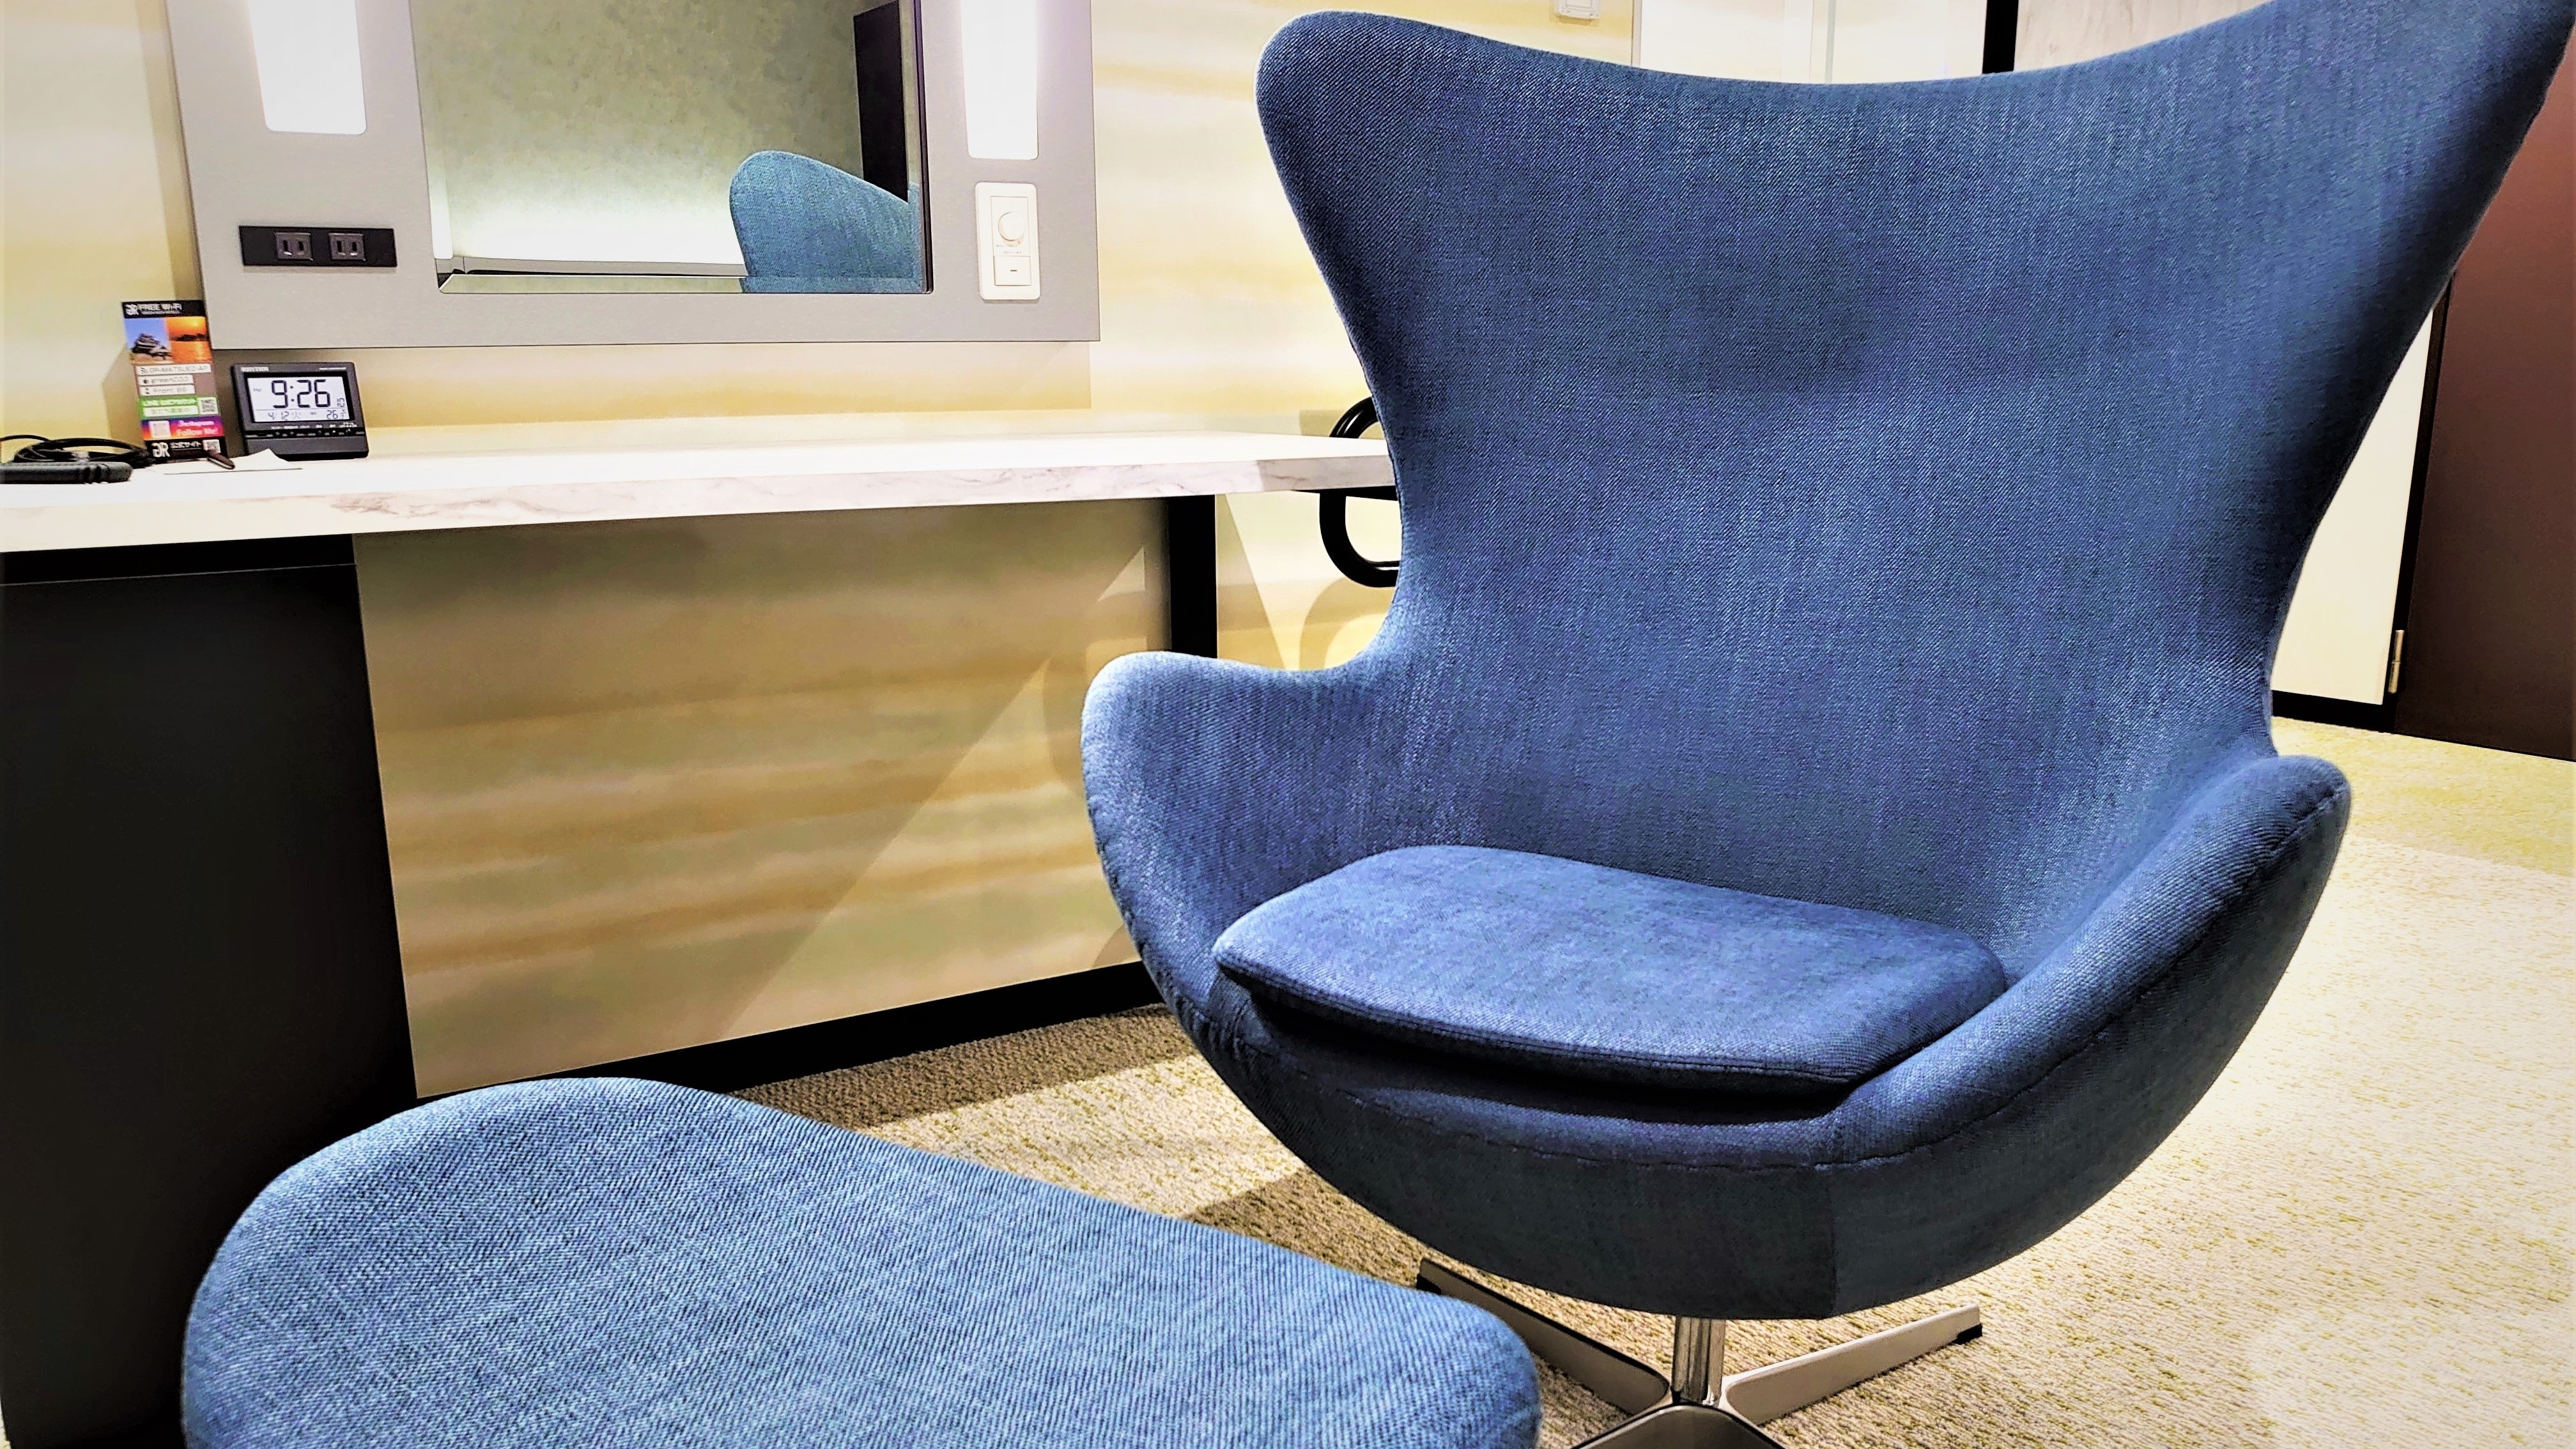 Executive room chair with ottoman